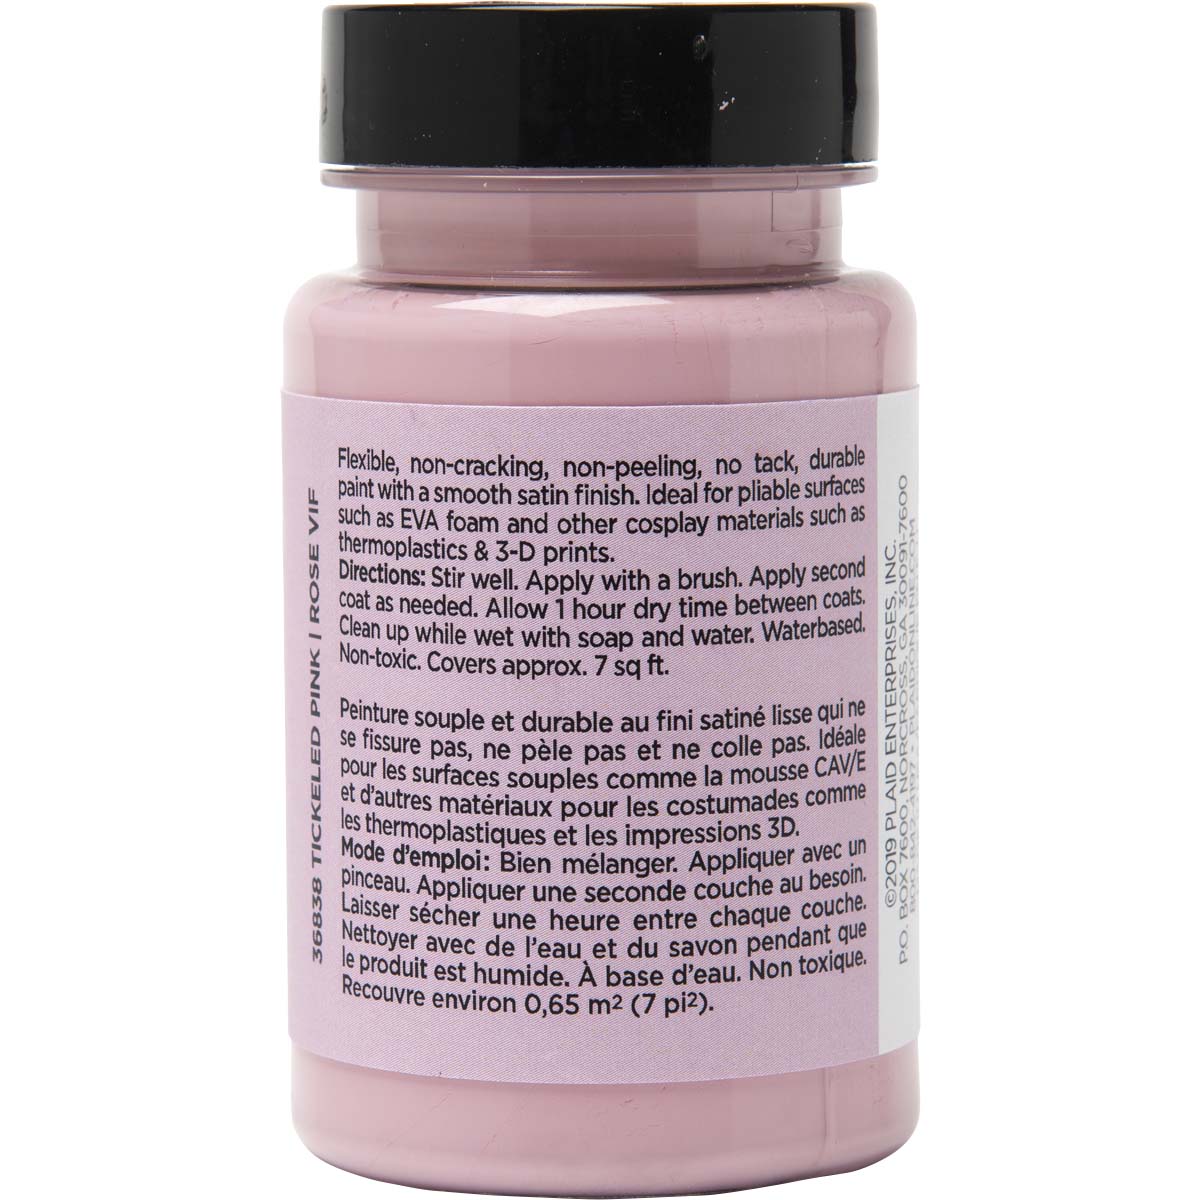 PlaidFX Smooth Satin Flexible Acrylic Paint - Tickled Pink, 3 oz. - 36838